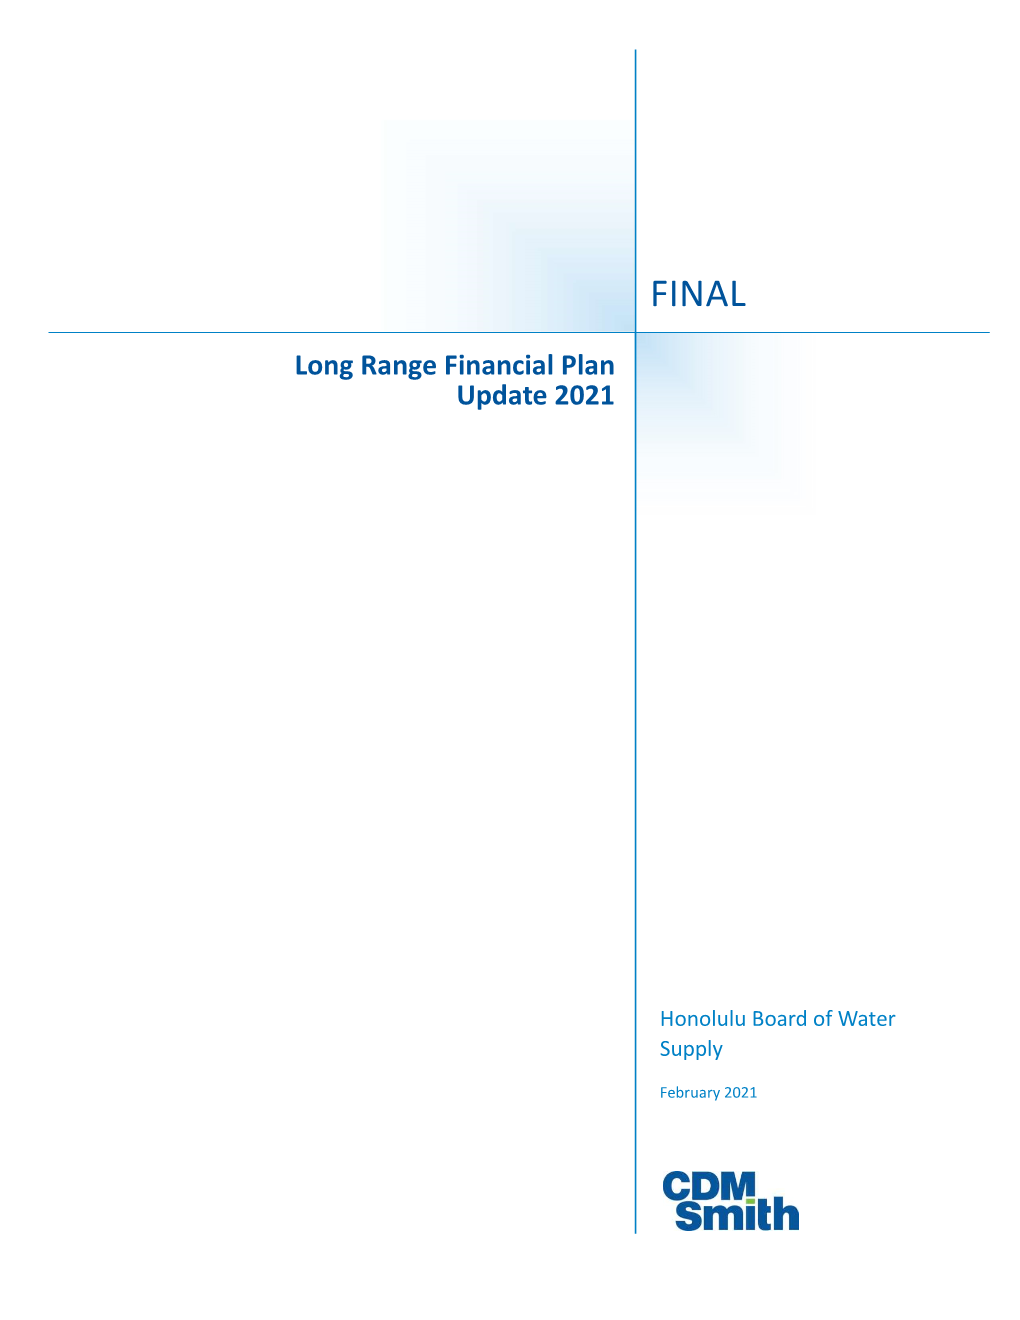 Long Range Financial Plan Update 2021